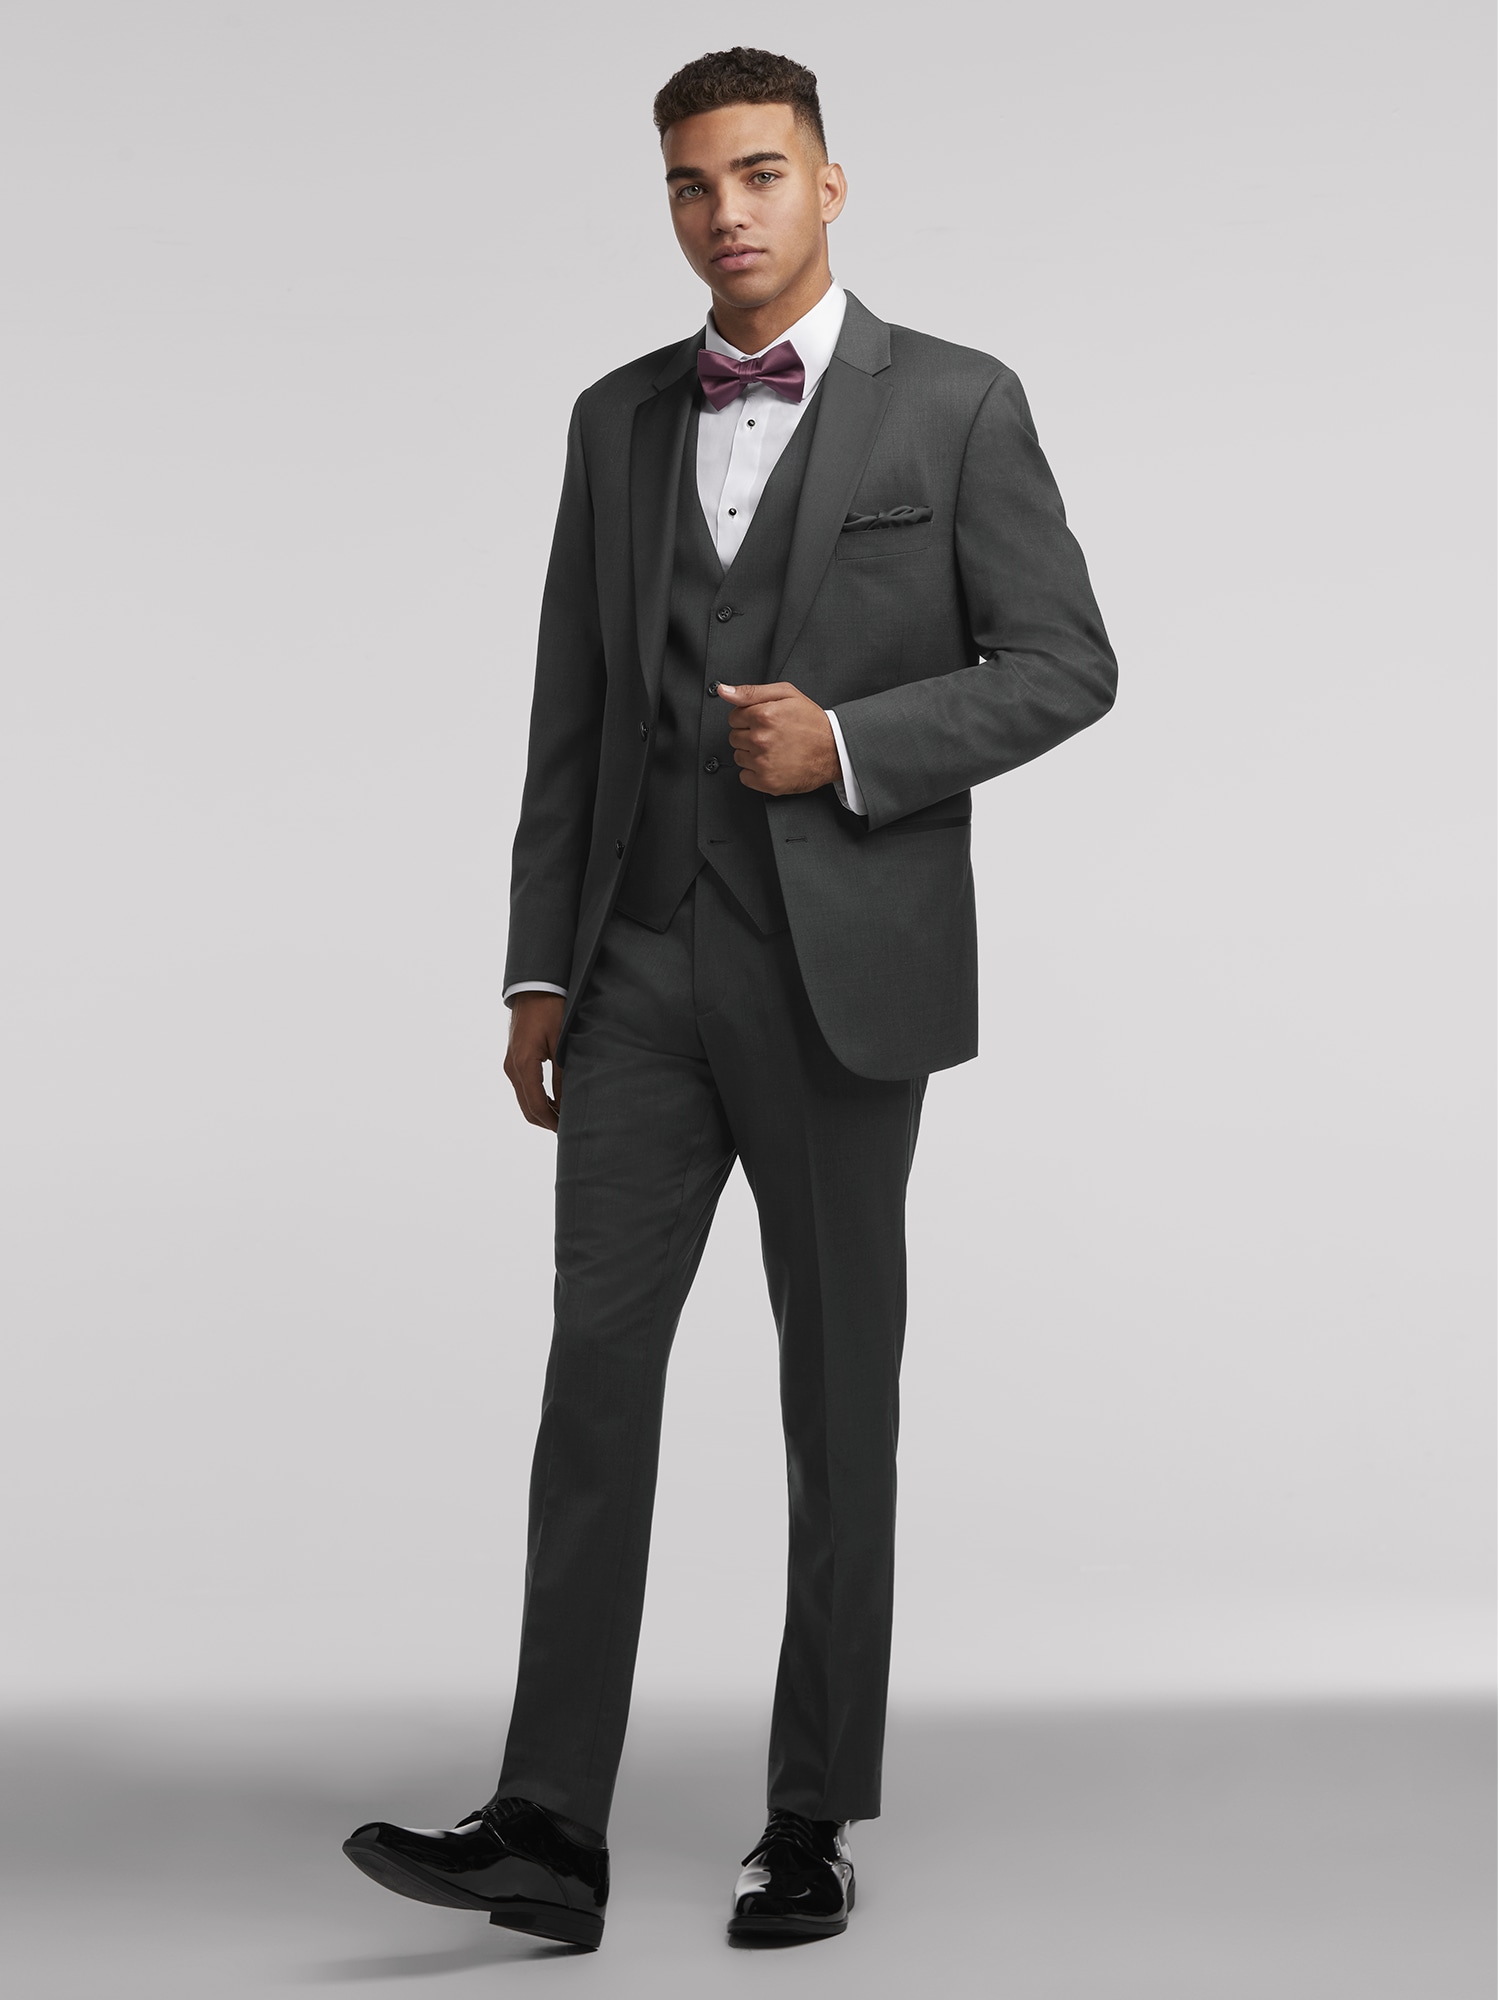 Performance Gray Tux by Calvin Klein | Tuxedo Rental | Moores Clothing